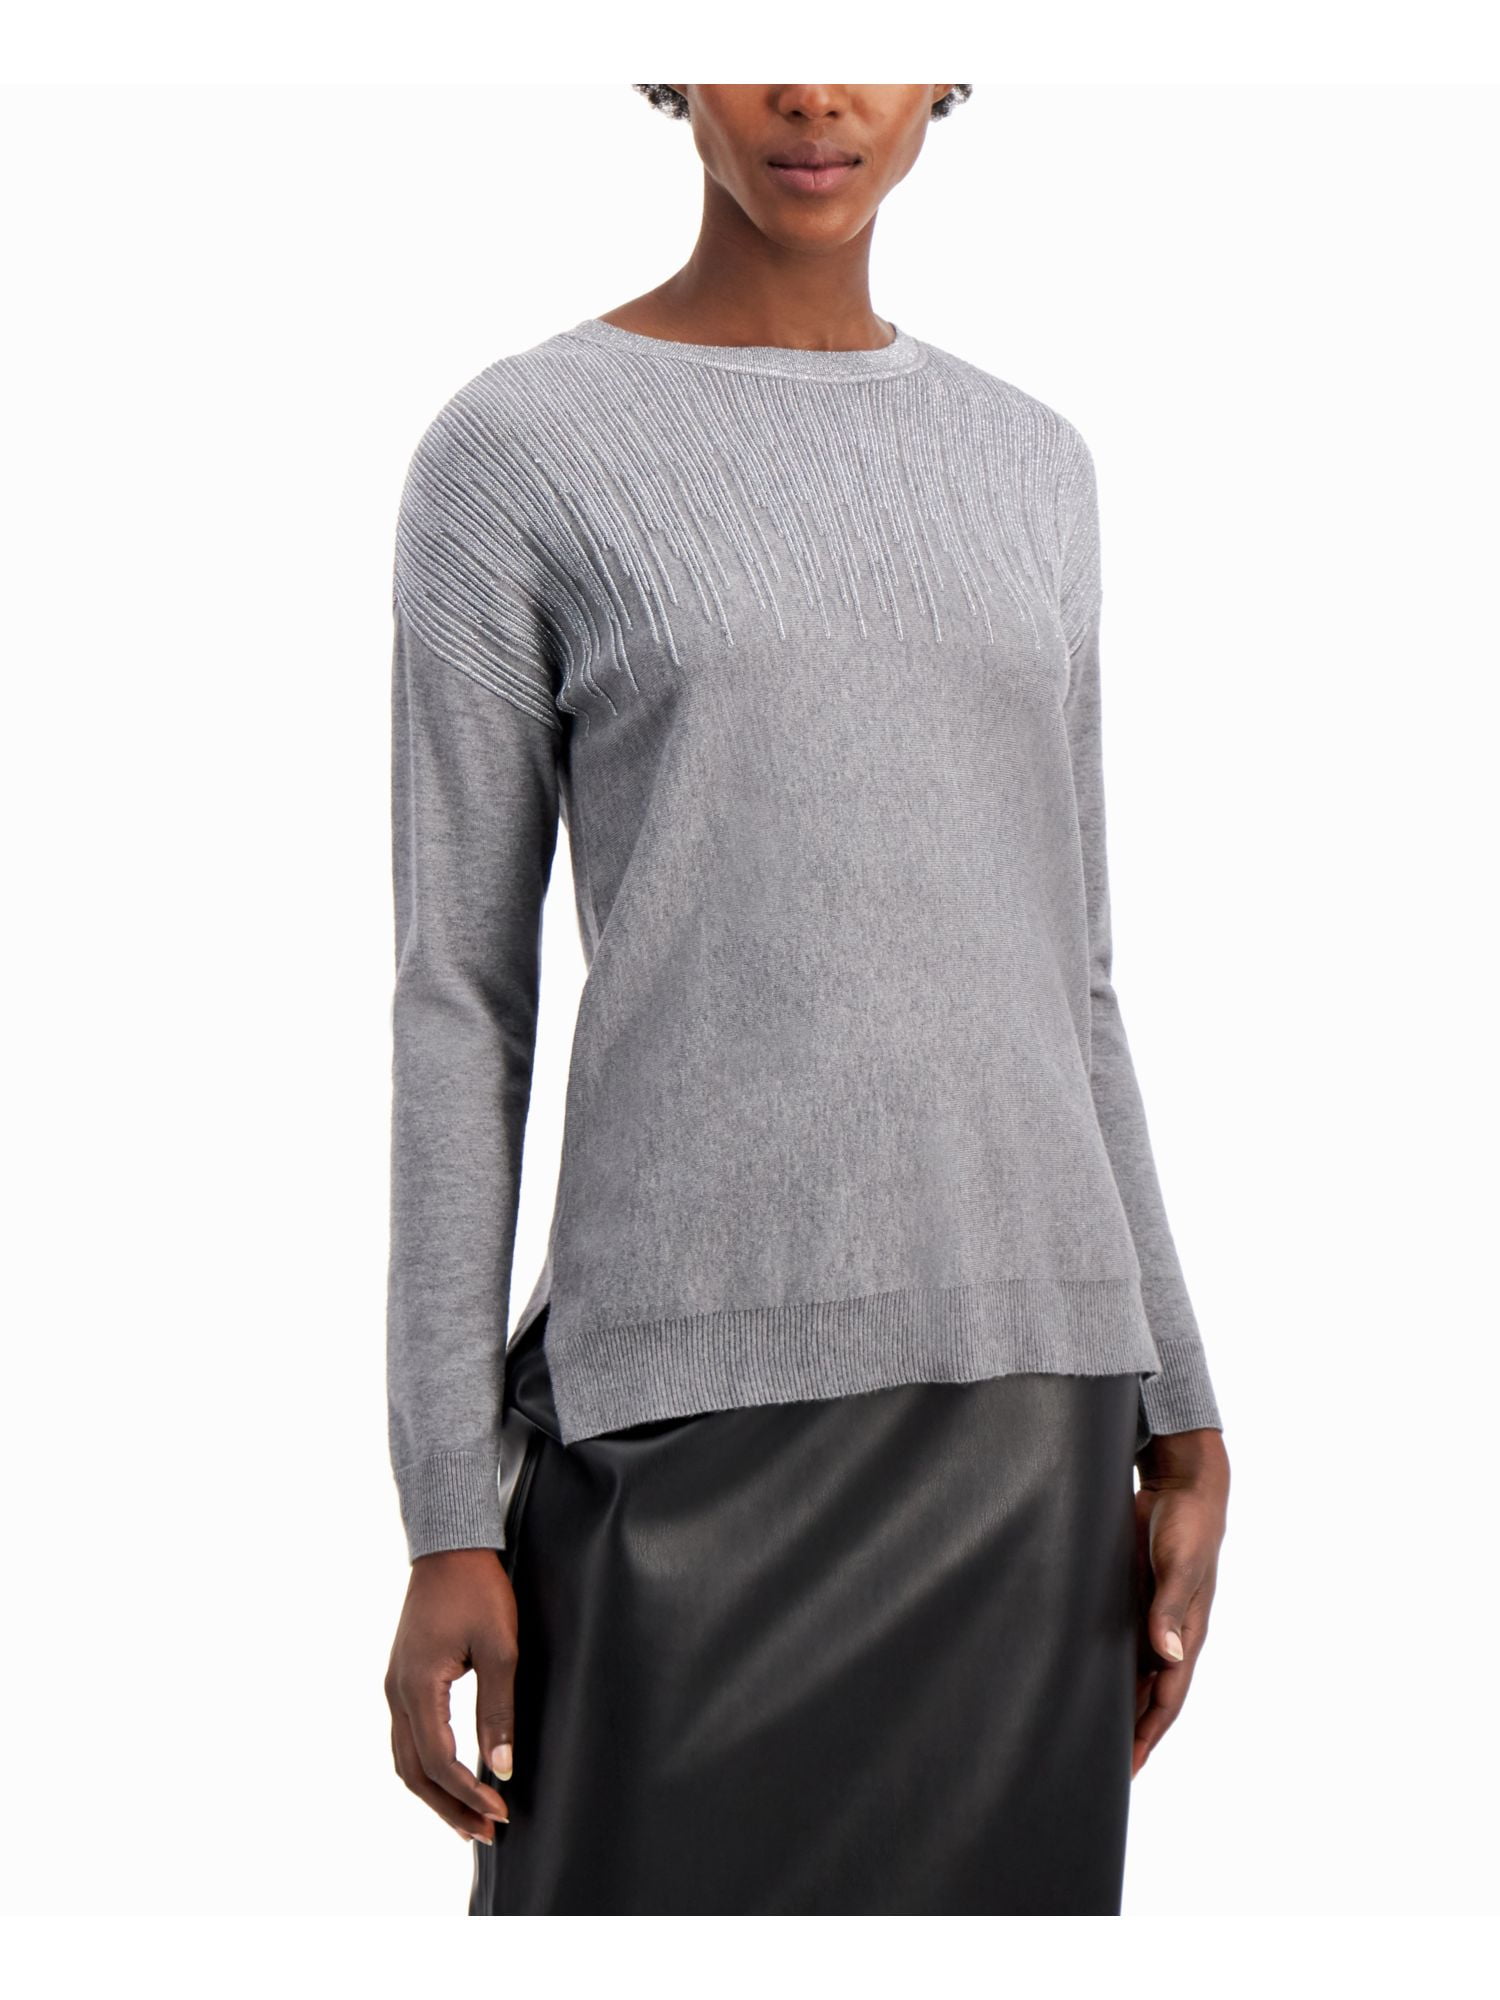 Alfani Women's Ribbed Swing Long Sleeves Casual Top Sweater Pulloever Black P/M 